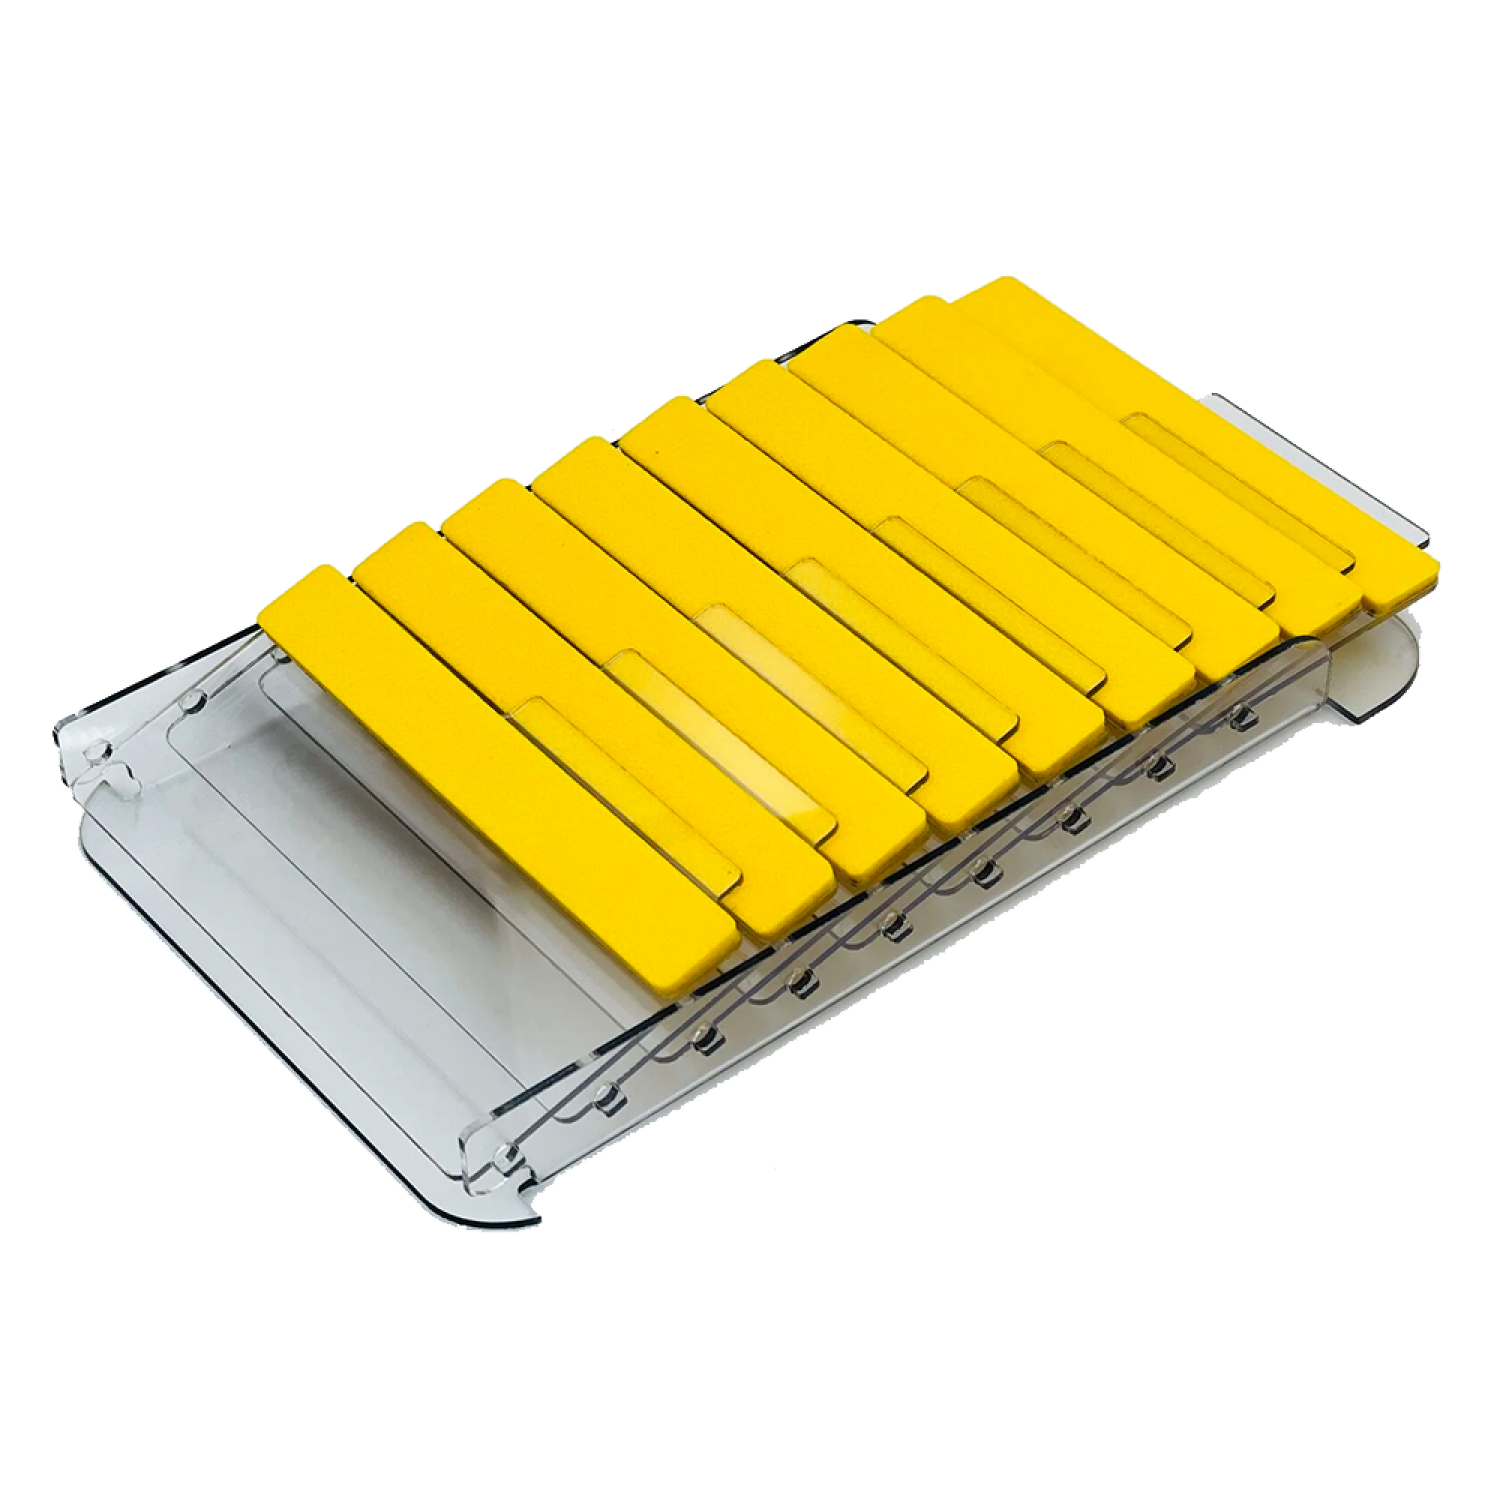 Картотека в ящик Trout Arena для Meiho VS-7070/7070N и 7055/7055N желтый